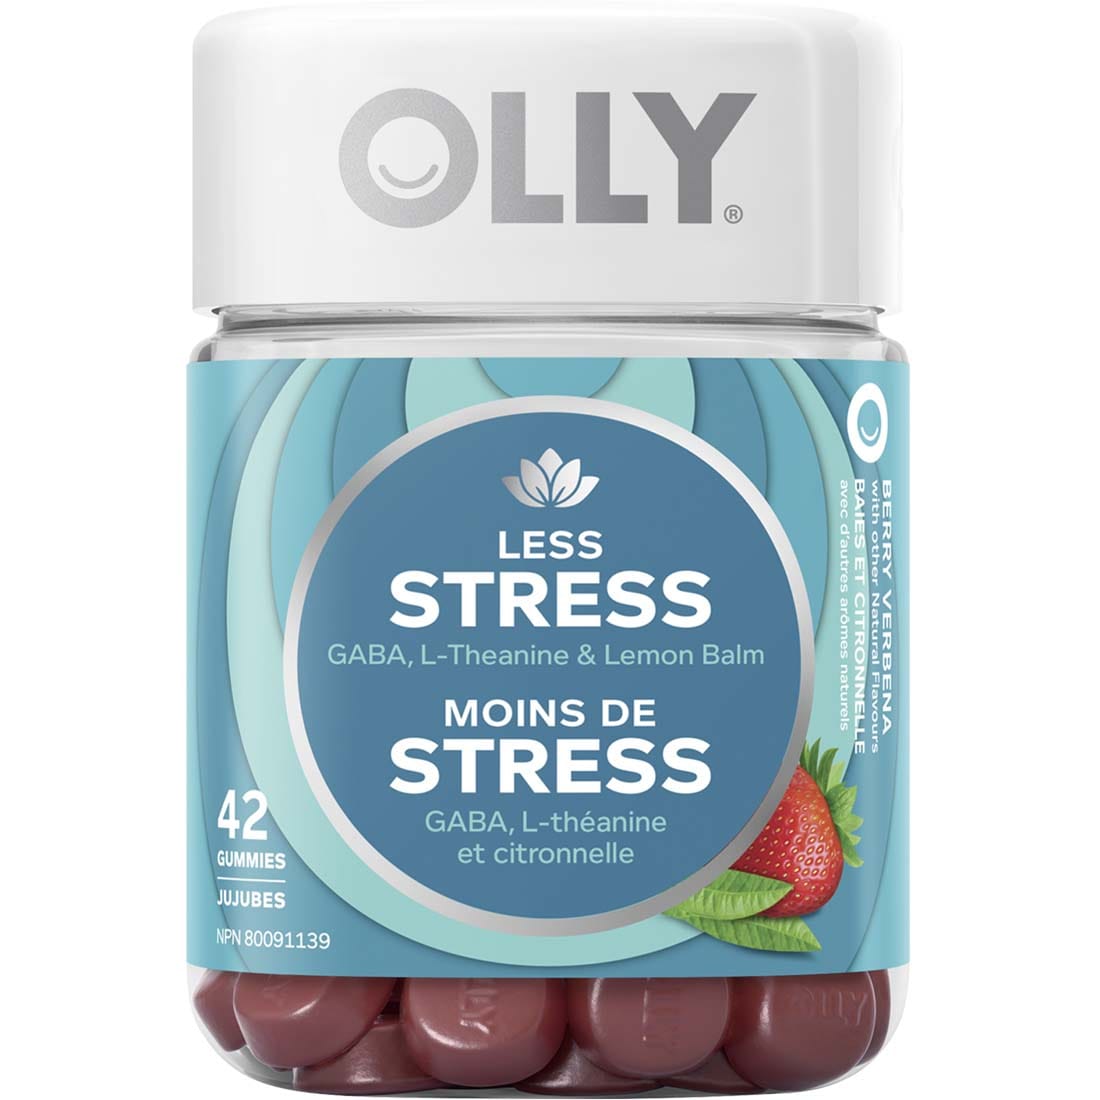 Olly Gummy Vitamins Less Stress, 42 Gummies